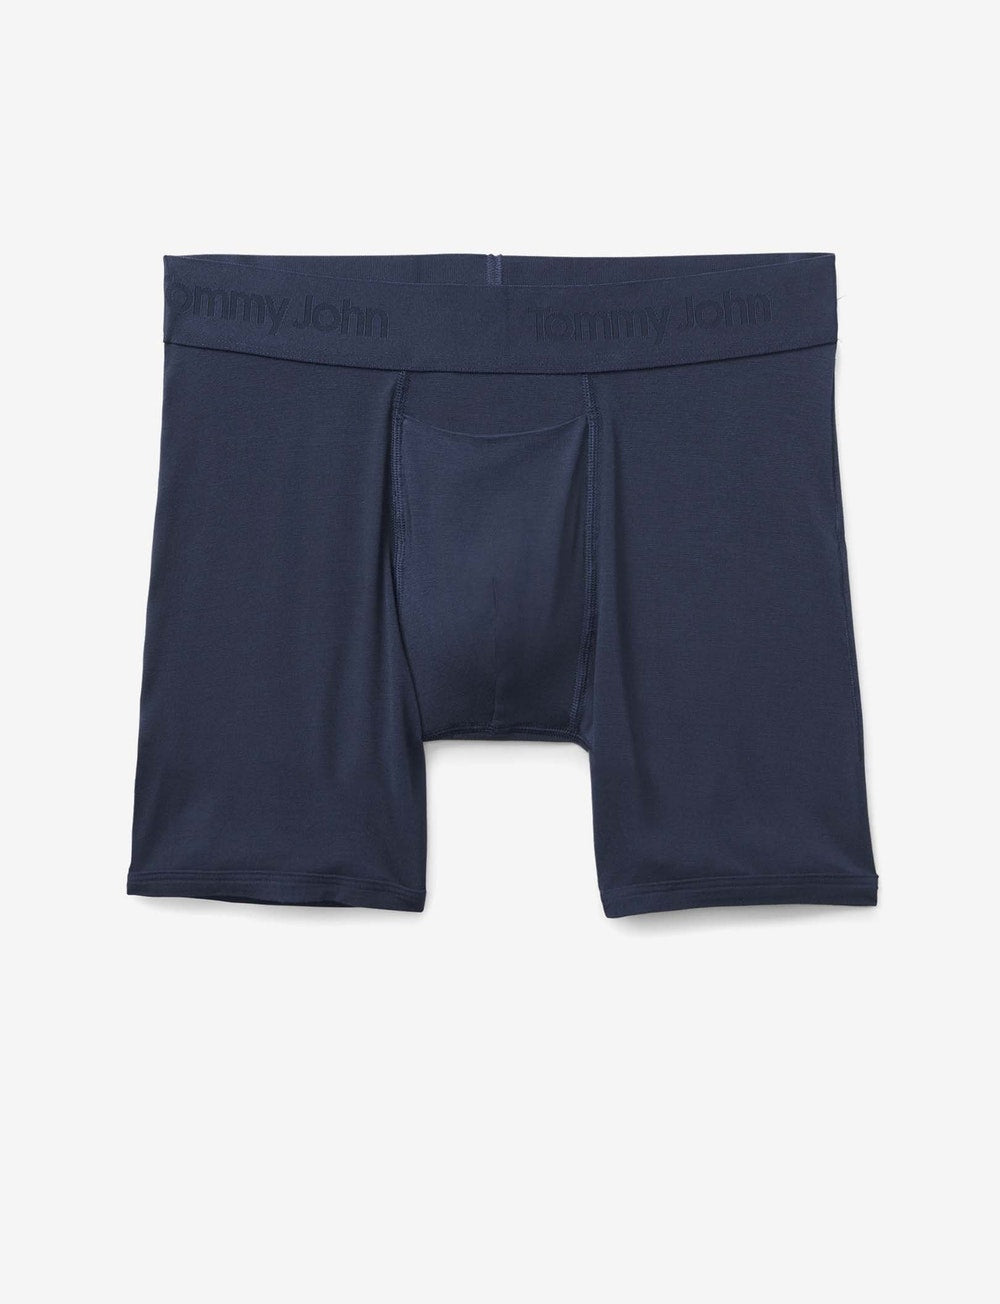 Tommy John Men's Underwear, Boxer Brief, Second Skin Fabric with 8 Inseam,  Black/Turbulence Colorblock, Small : : Fashion